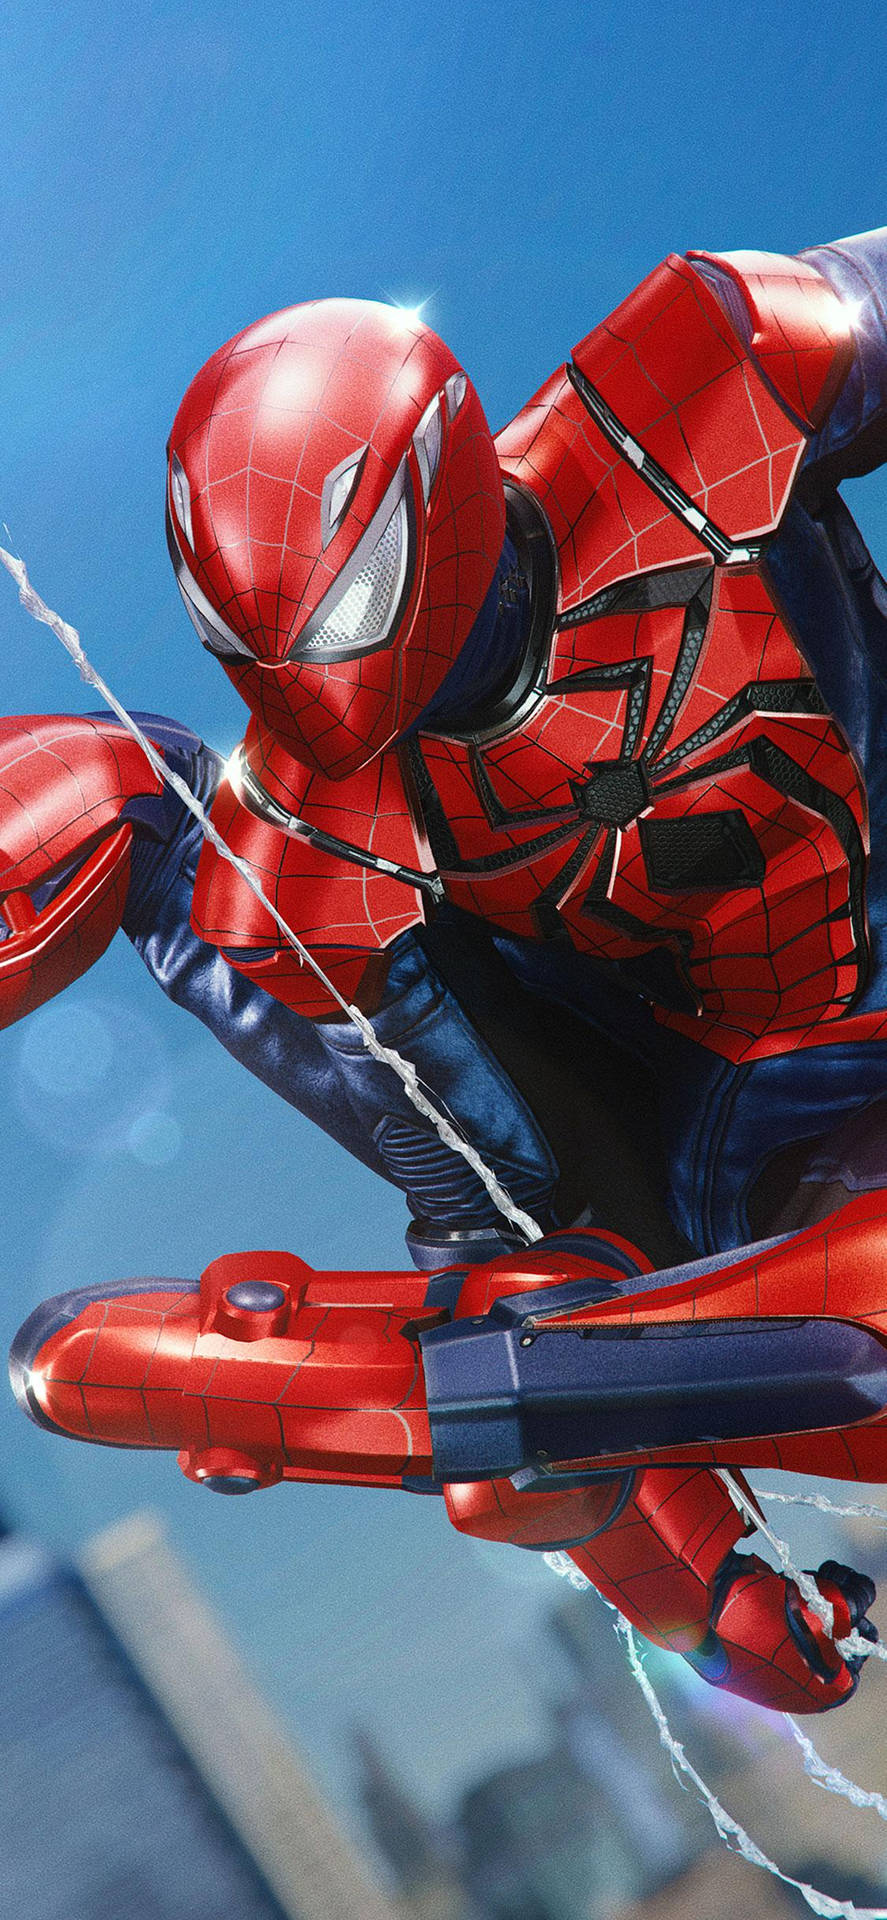 Armor Spider Man Iphone Wallpaper